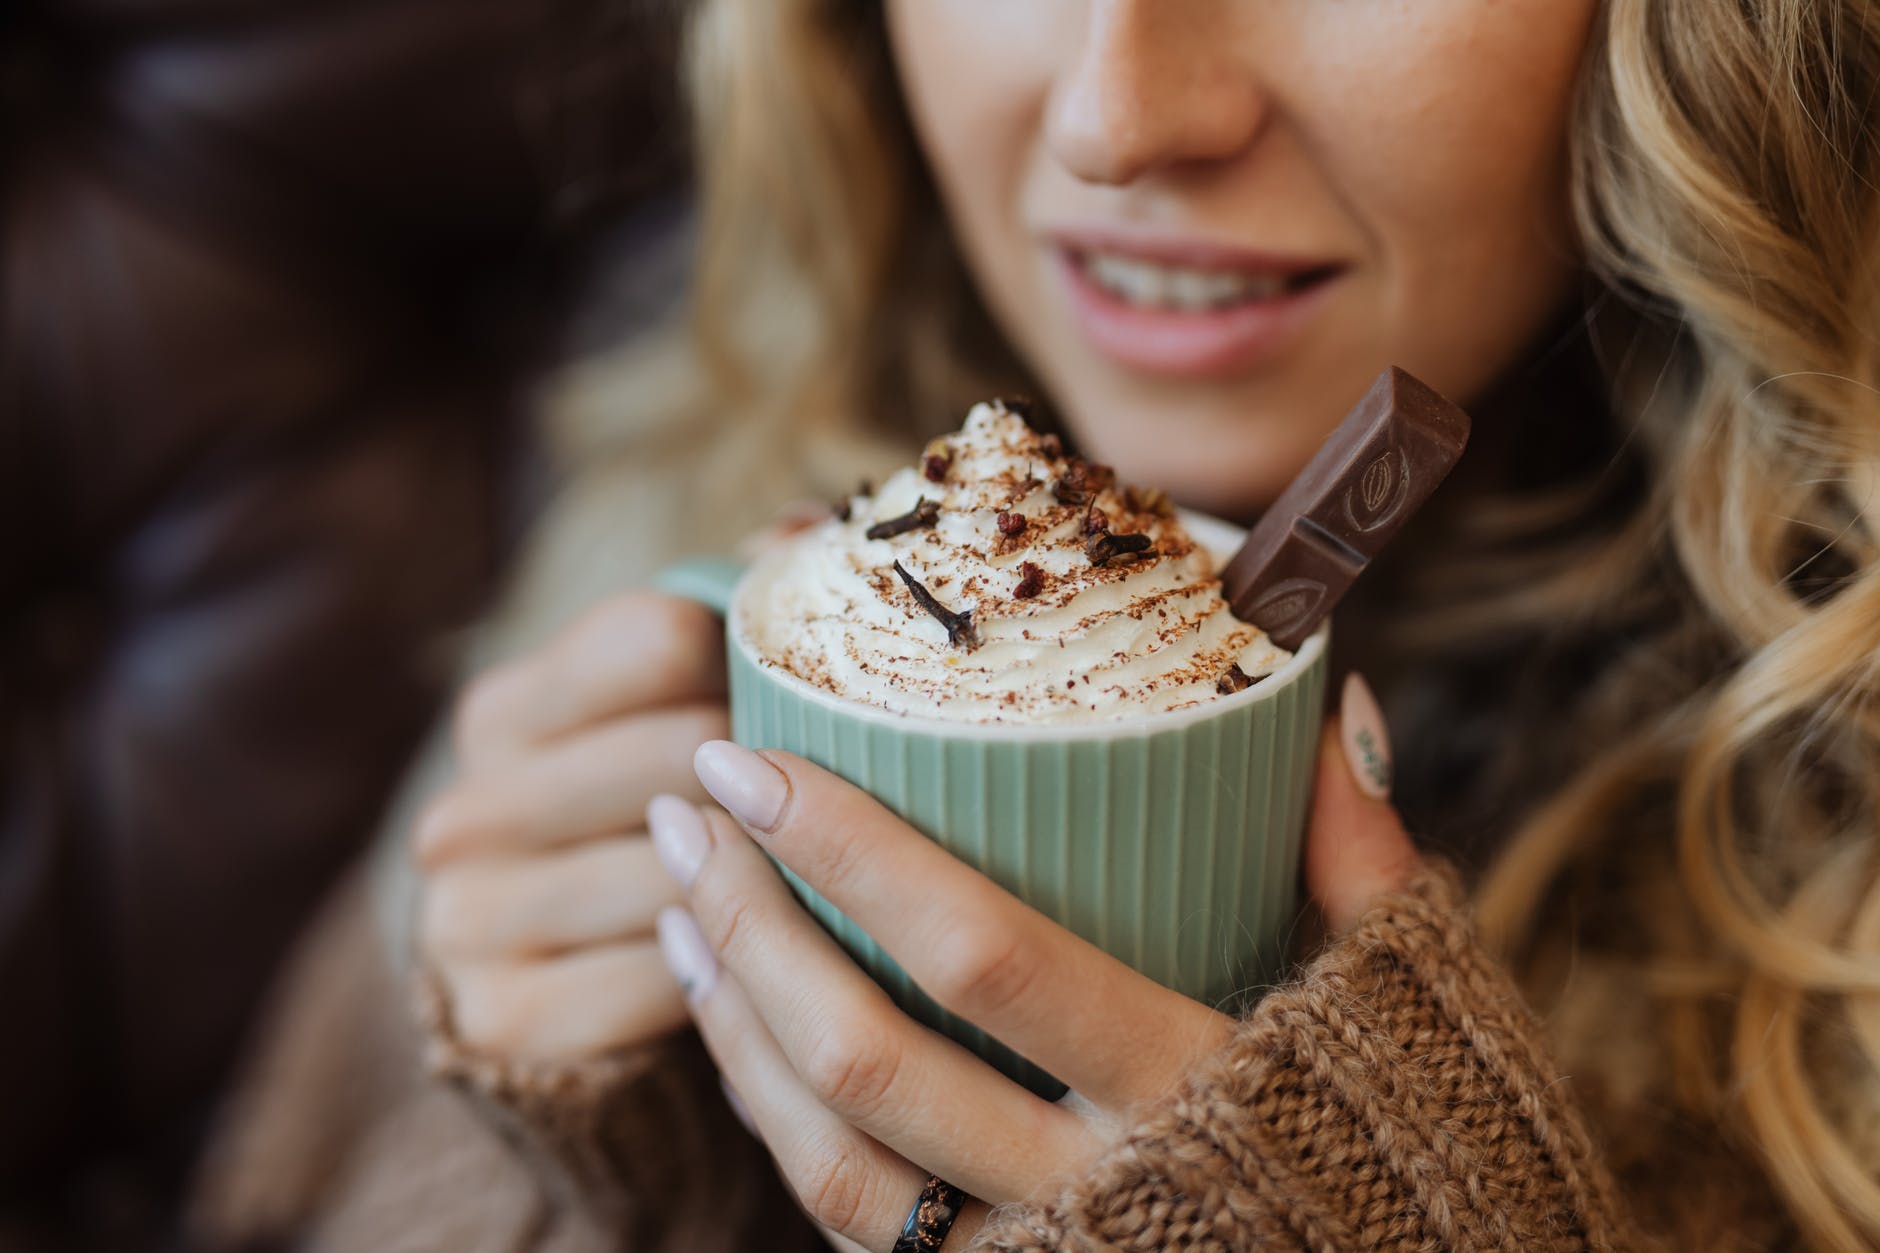 Christina sirota son chocolat chaud avec plaisir | Source : Pexels